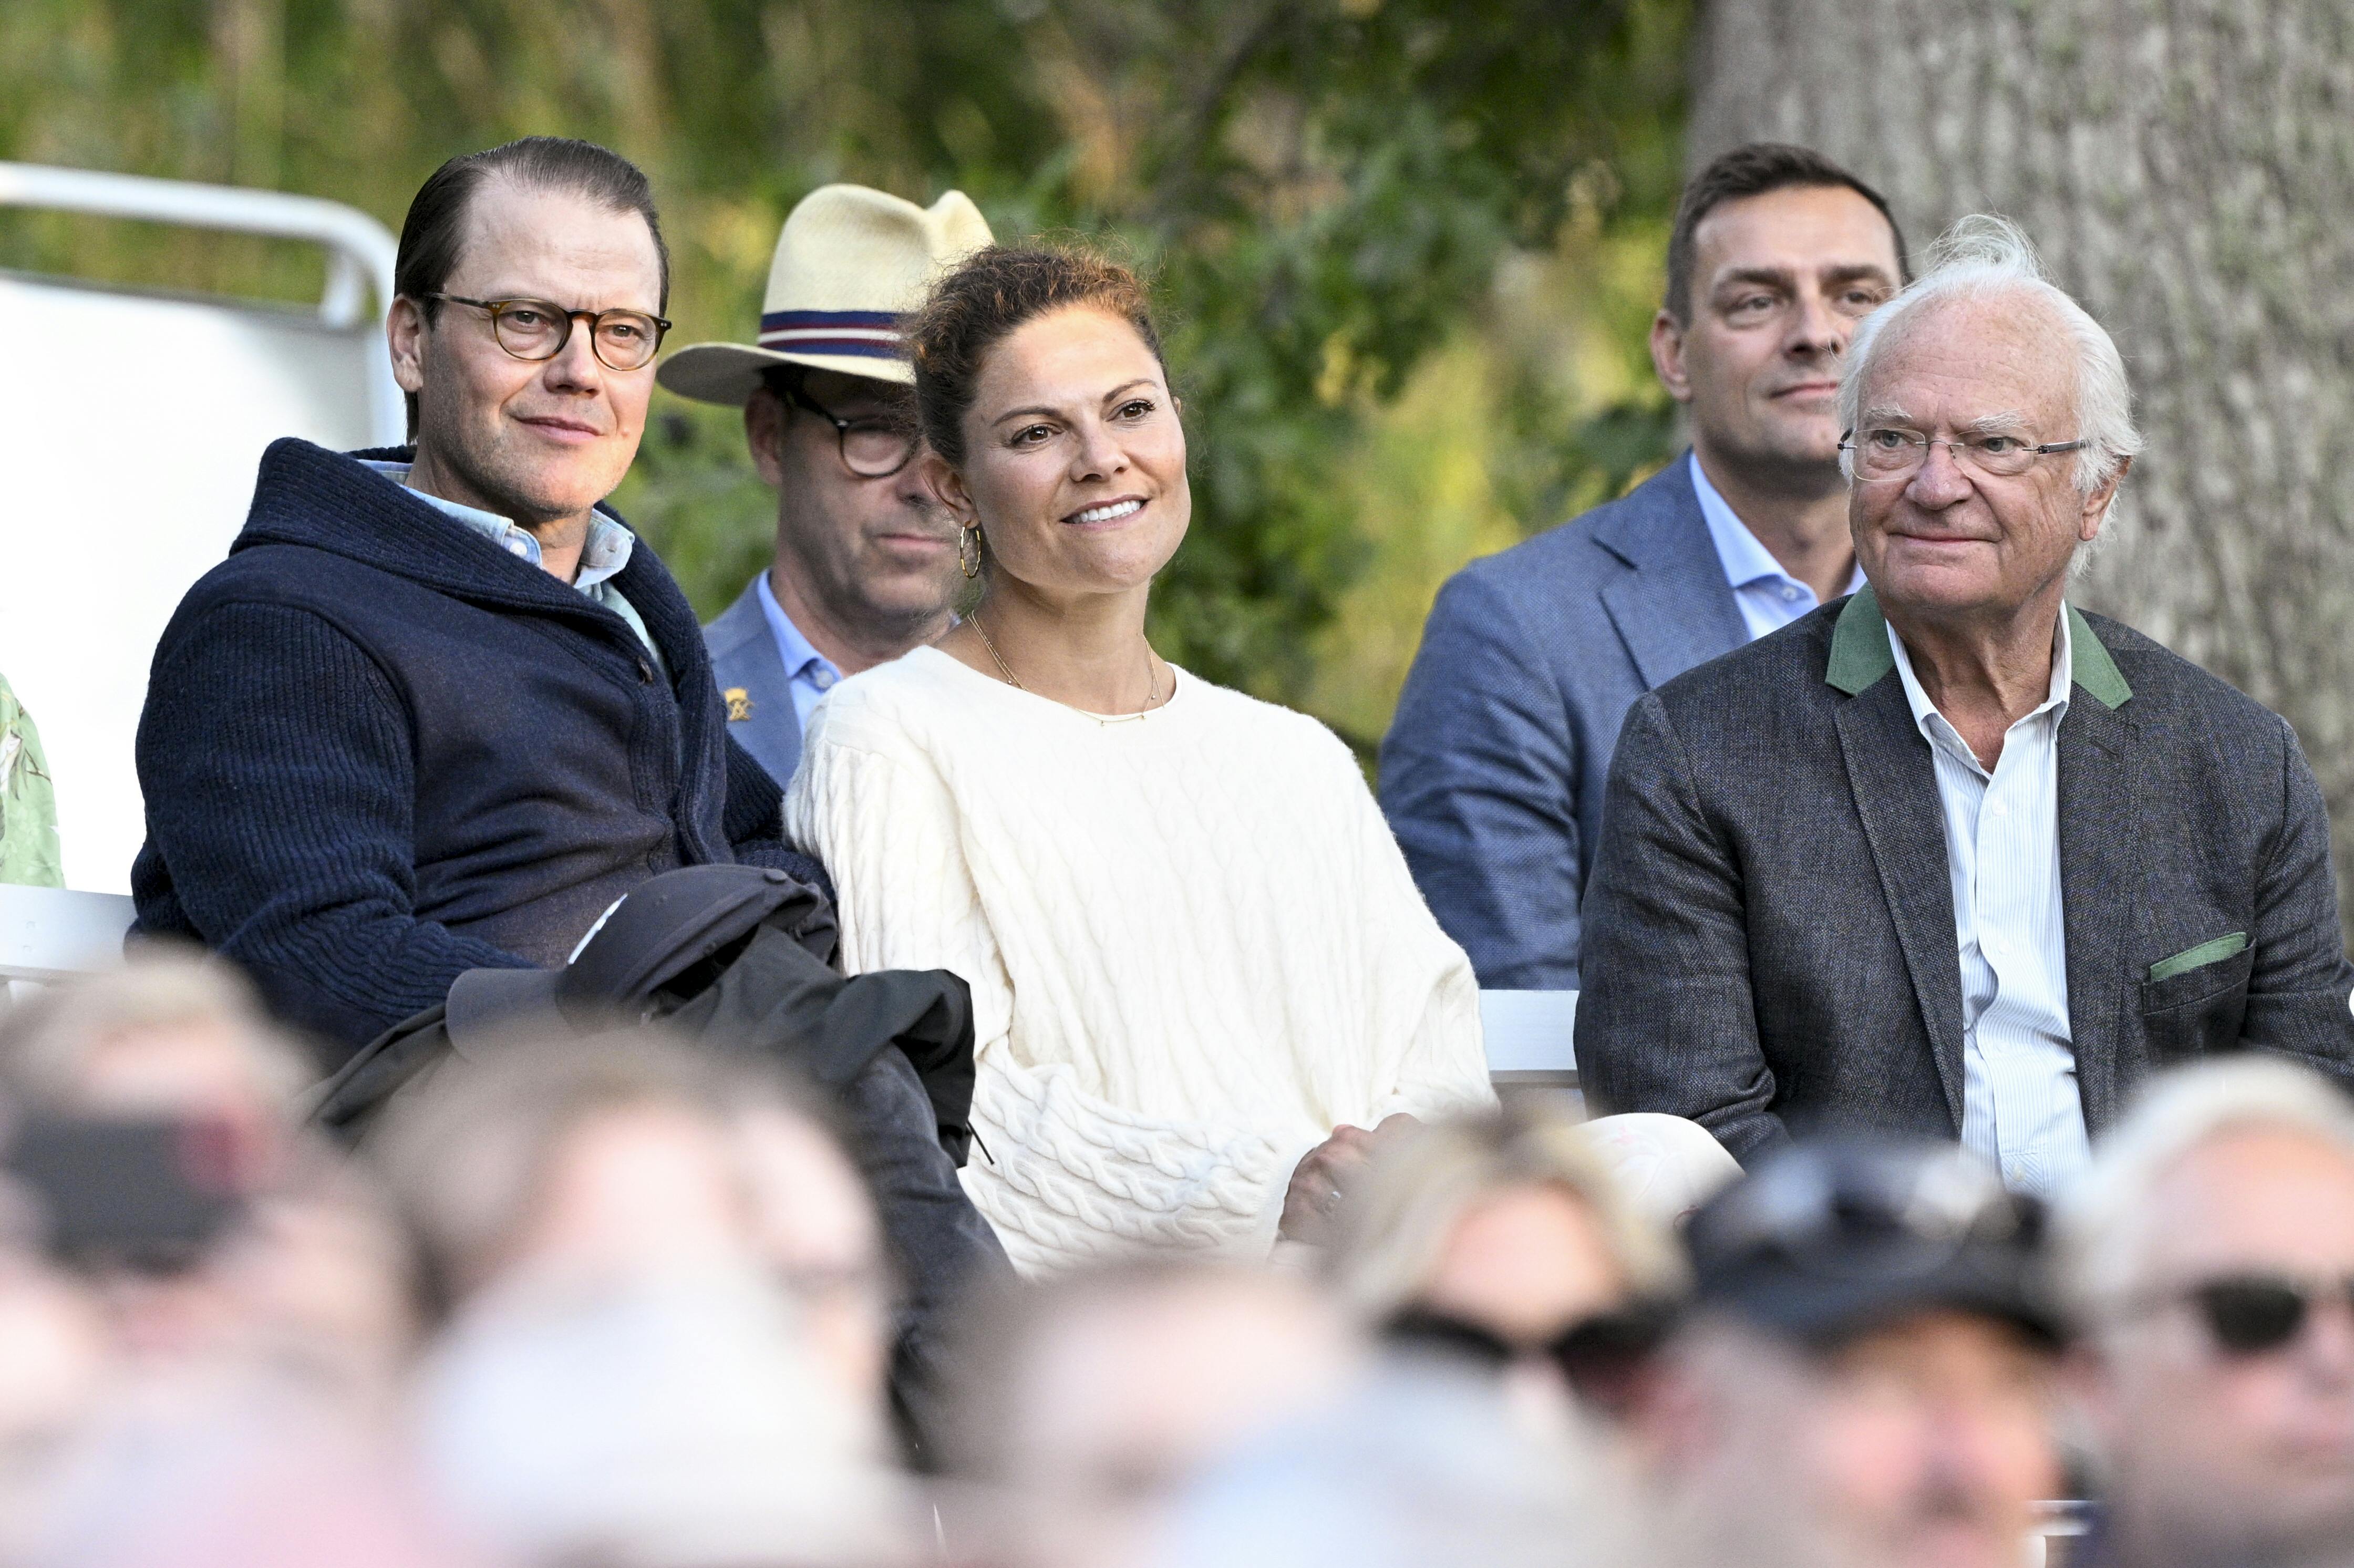 Kronprinsesse Victoria sad mellem sin mand, prins Daniel, og sin far, kong Carl Gustaf.&nbsp;
